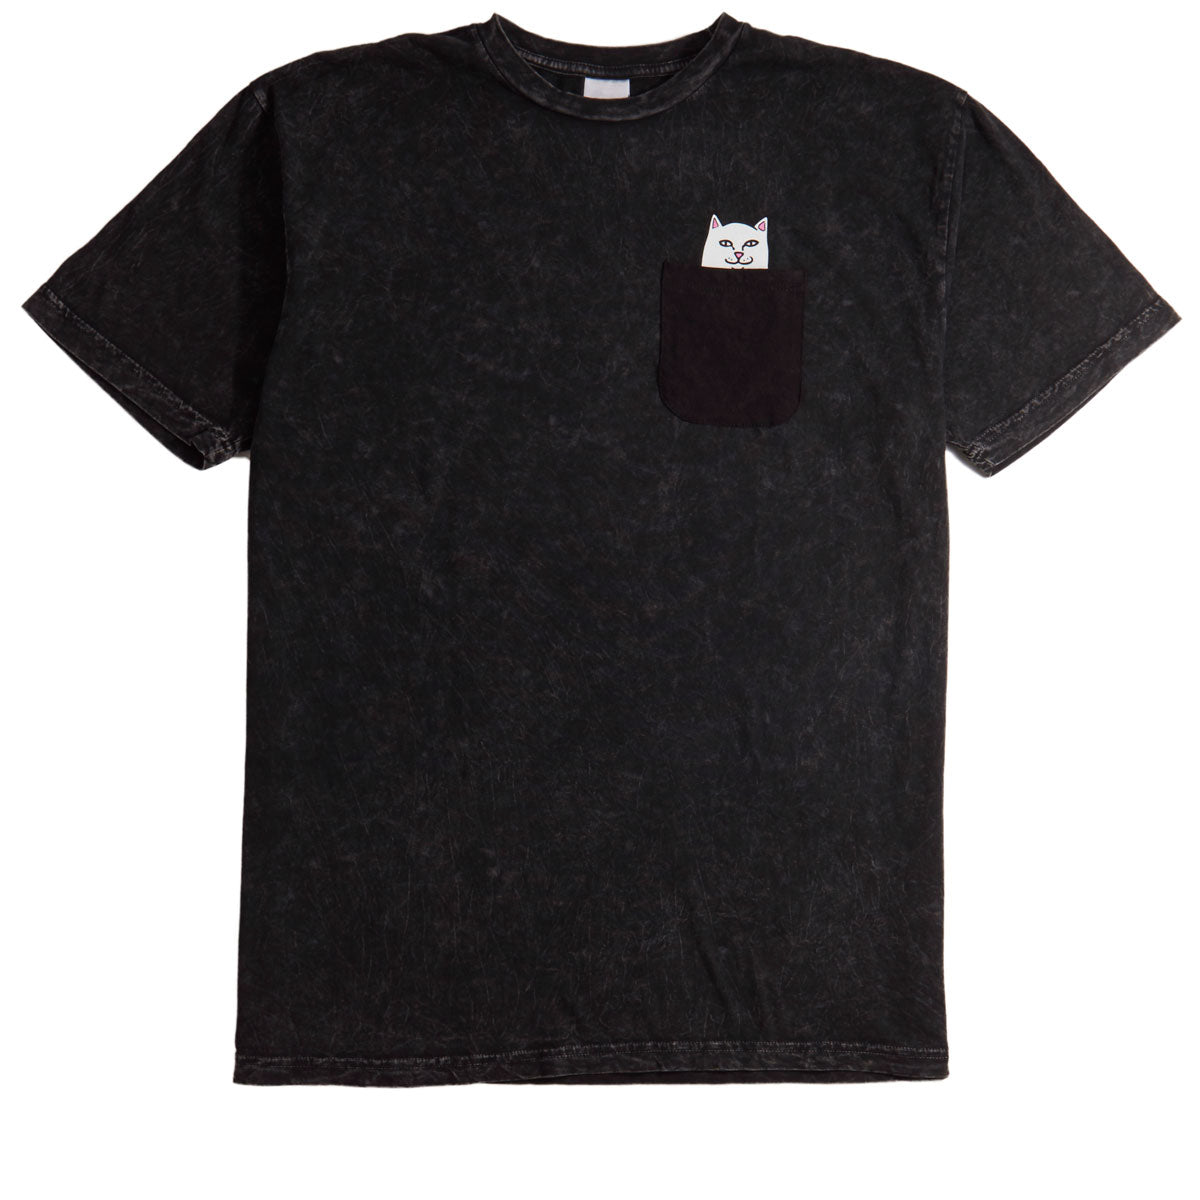 RIPNDIP Lord Nermal Pocket T-Shirt - Black Mineral Wash image 1